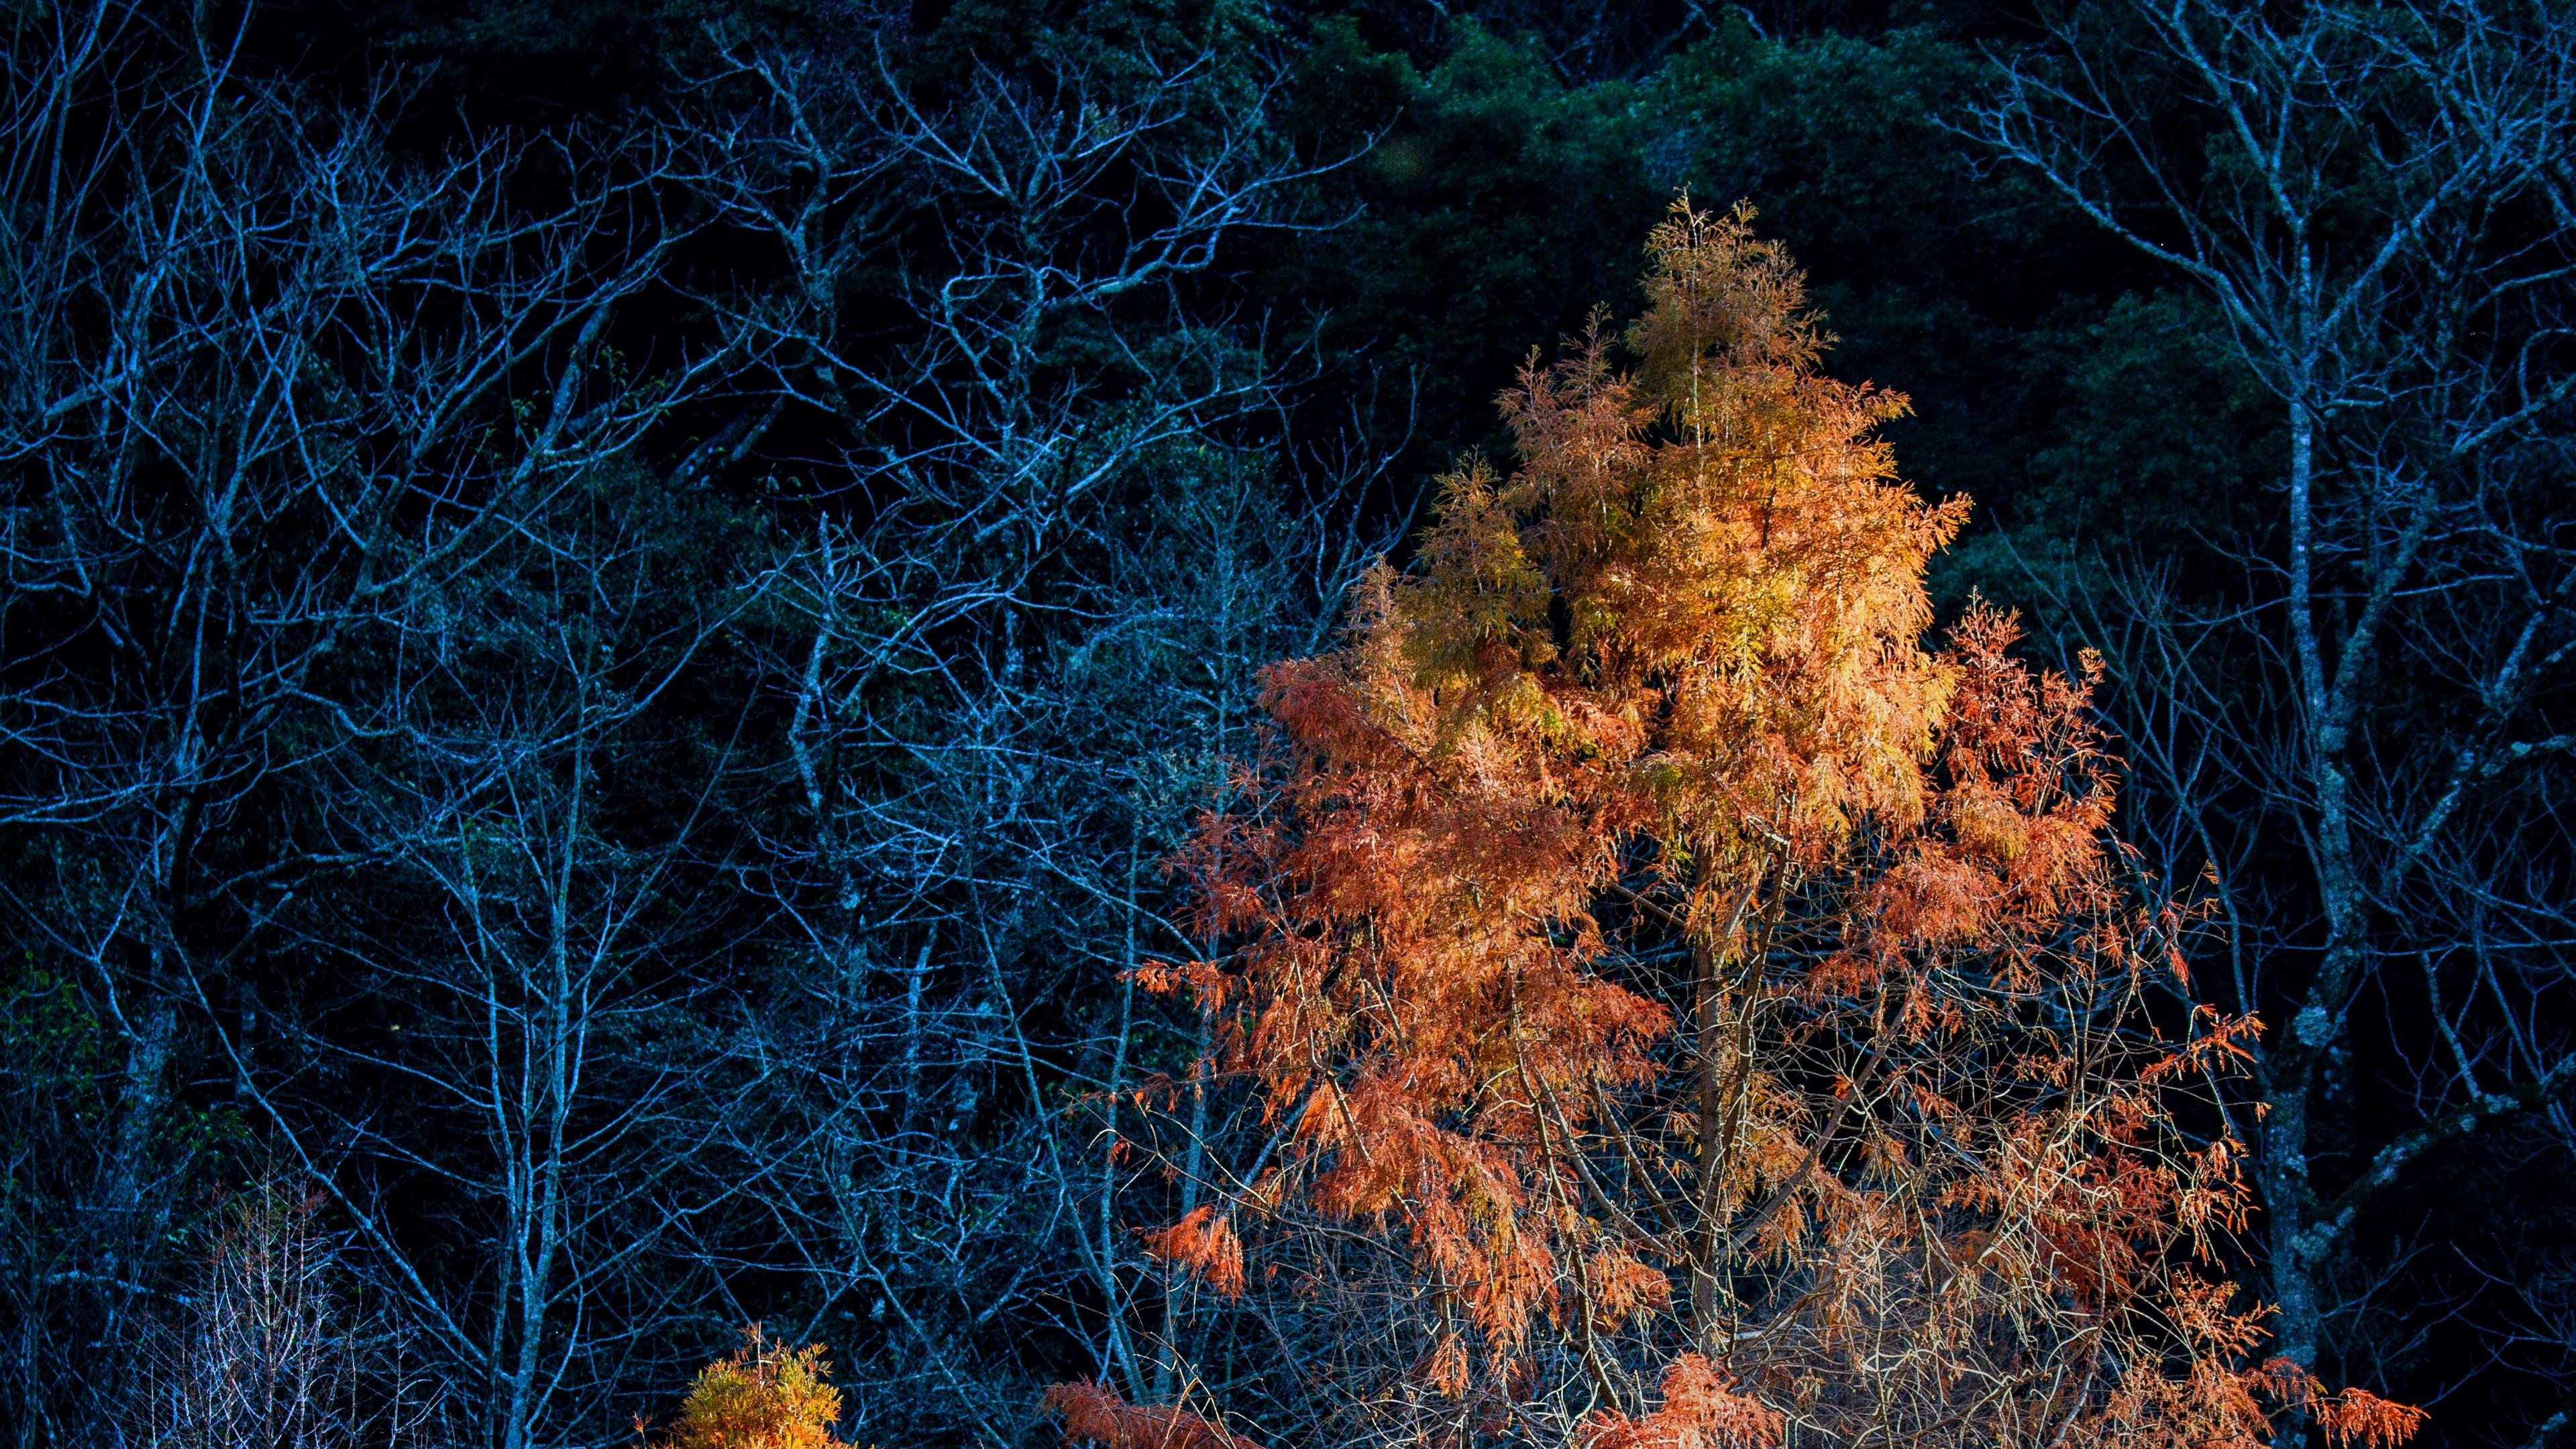 Download wallpaper 3840x2160 trees, autumn, dark, branches